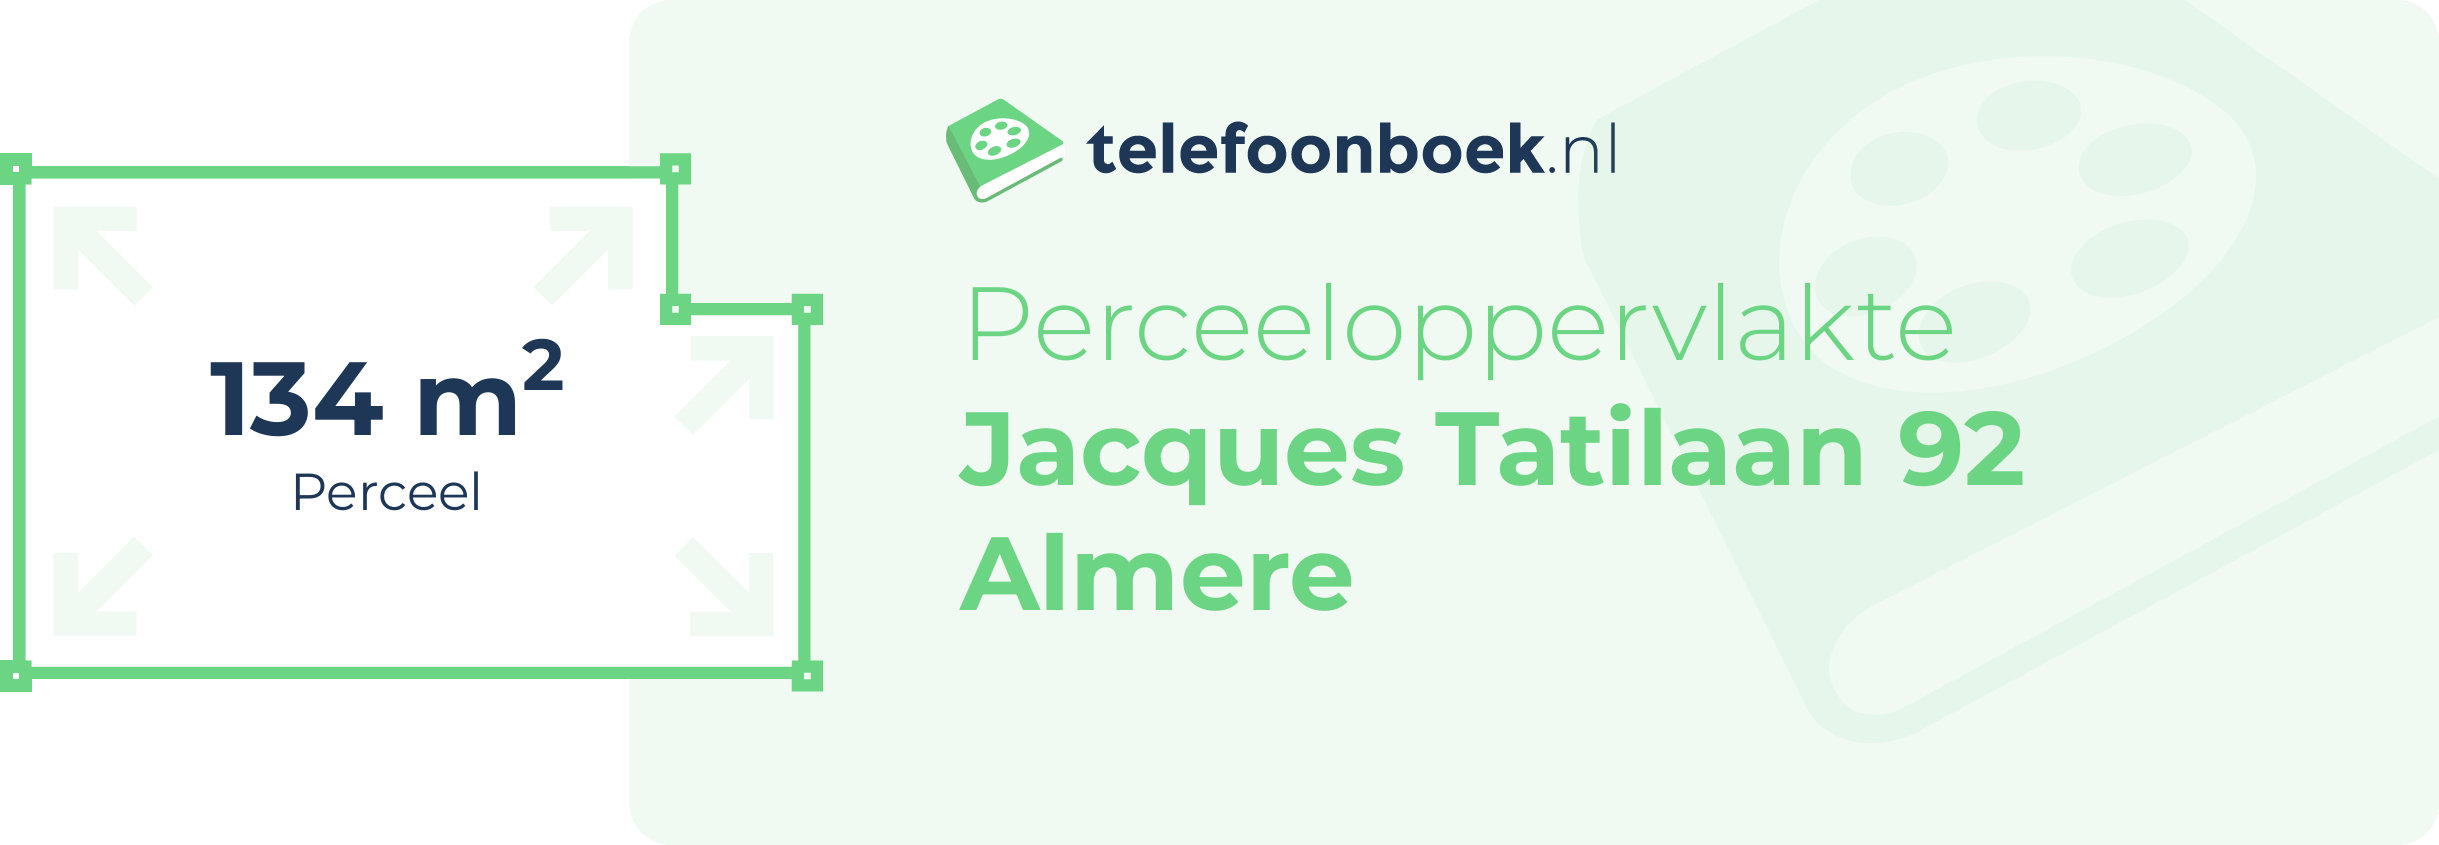 Perceeloppervlakte Jacques Tatilaan 92 Almere